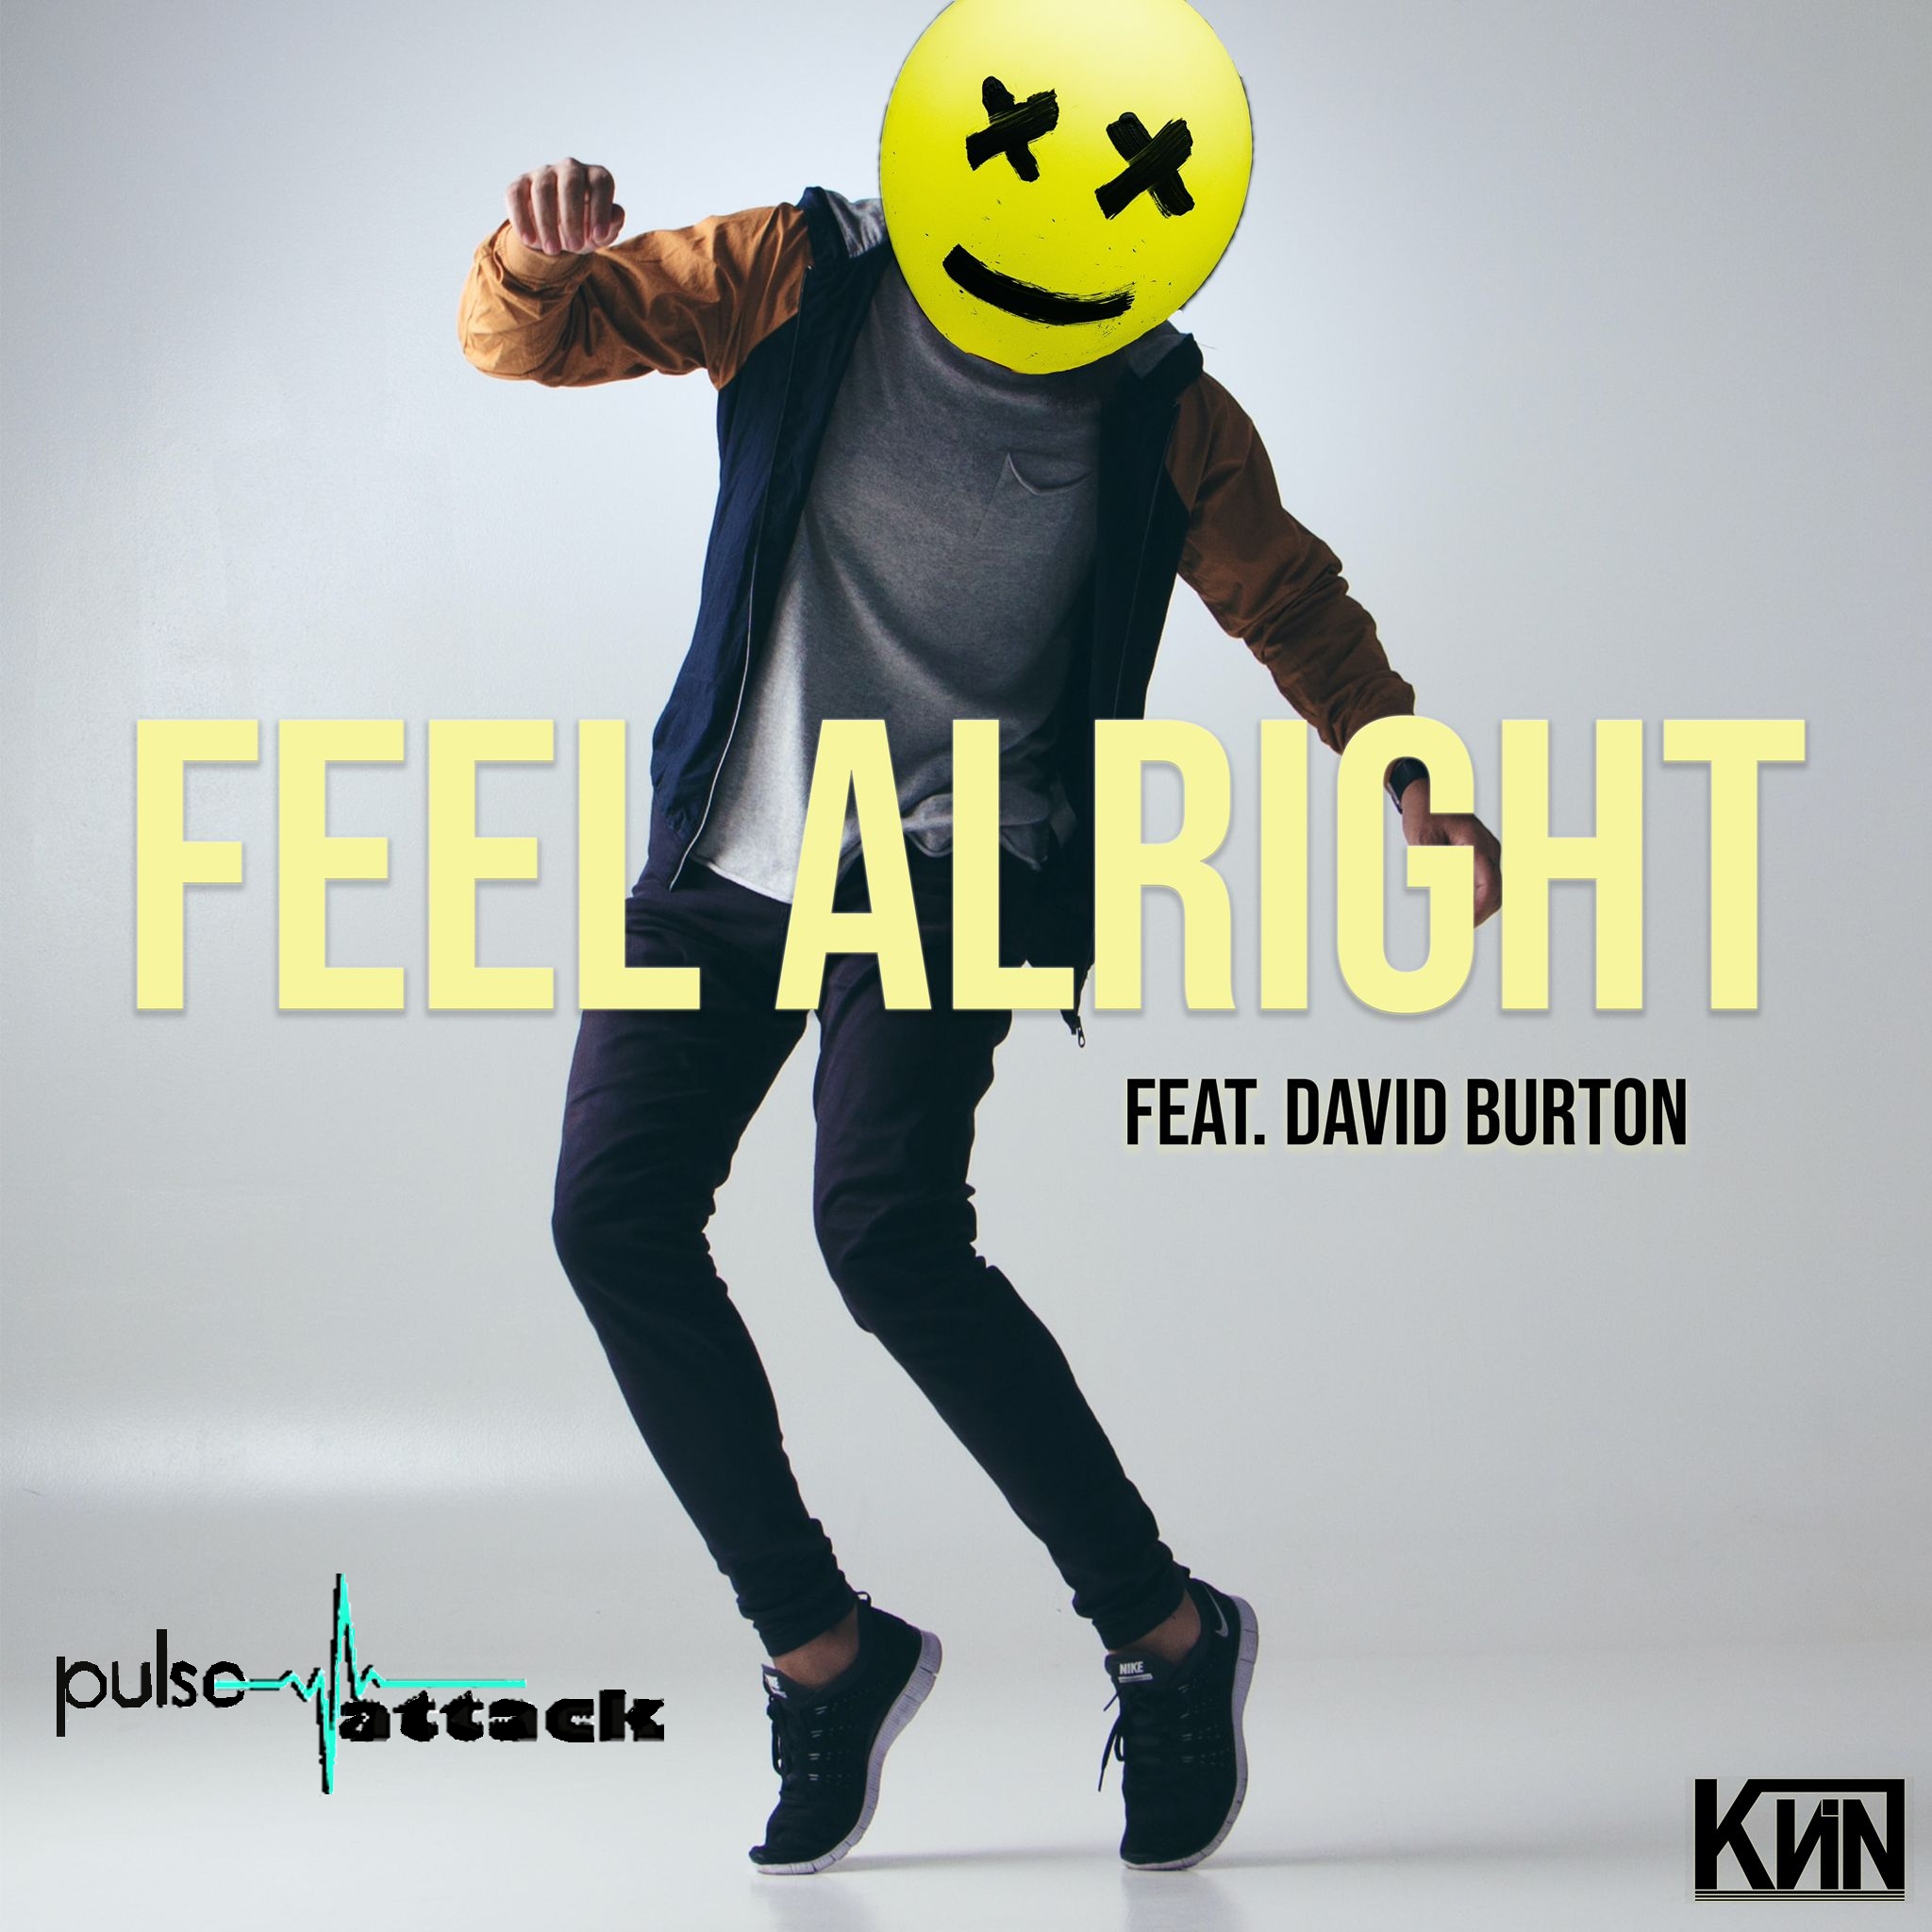 KVIN - Single "Feel Alright"